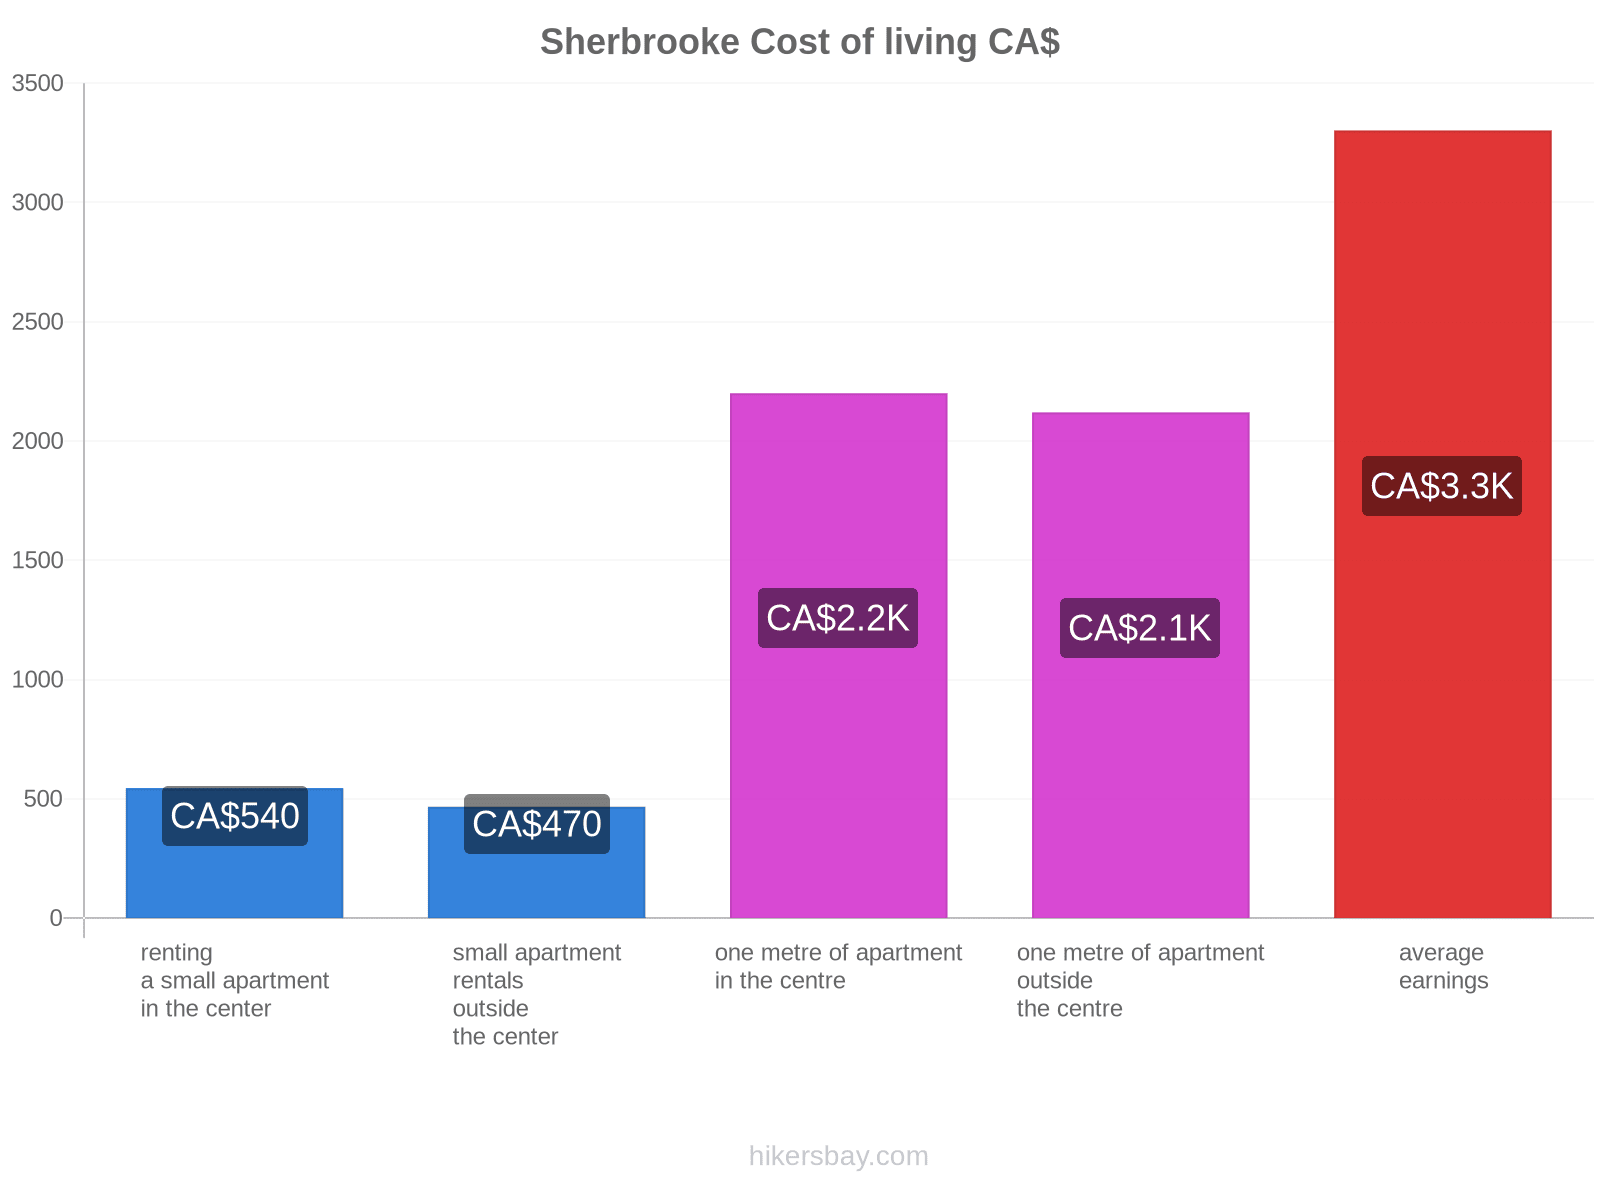 Sherbrooke cost of living hikersbay.com